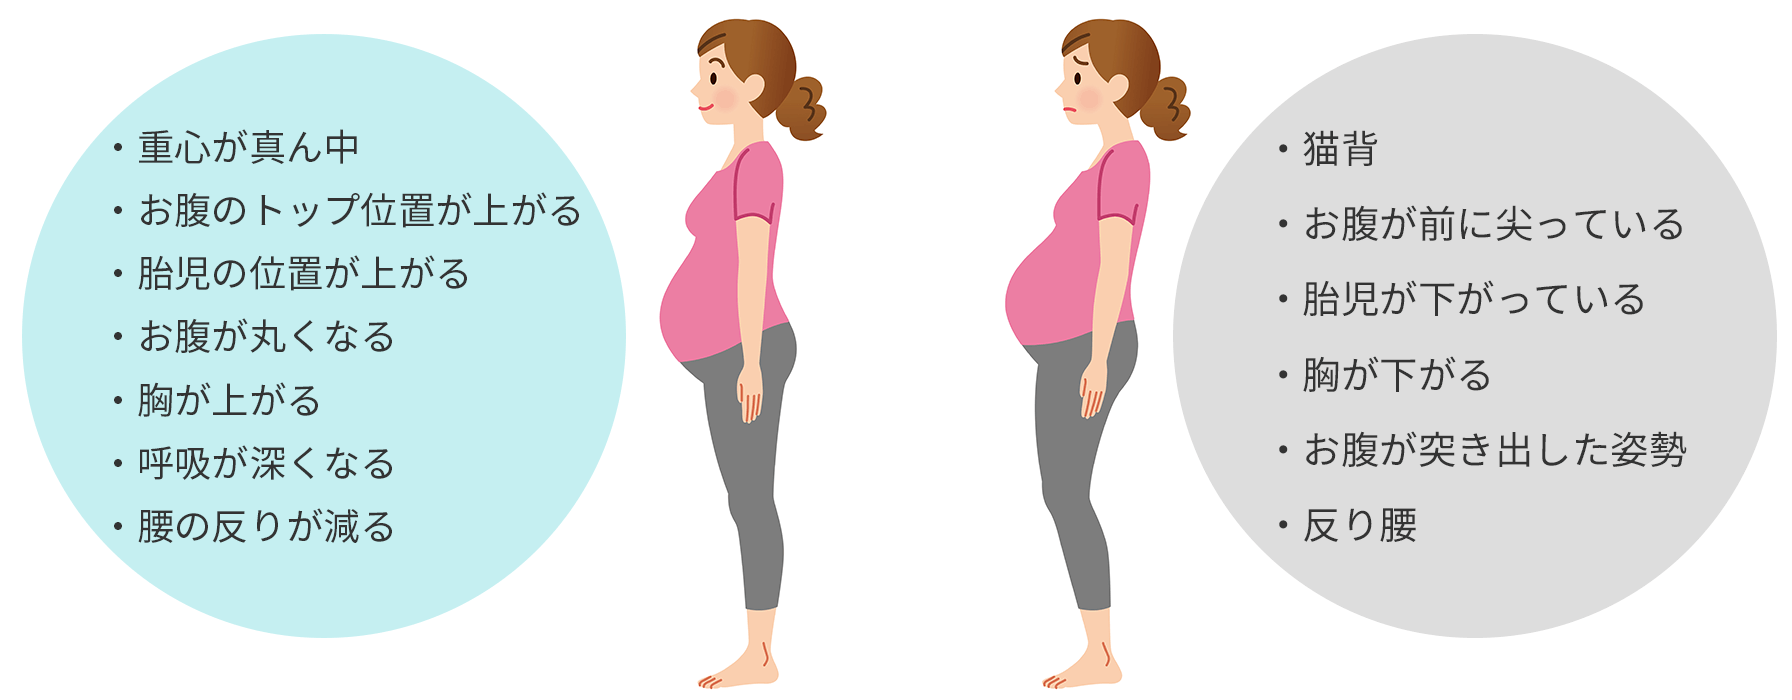 妊娠と骨格変化